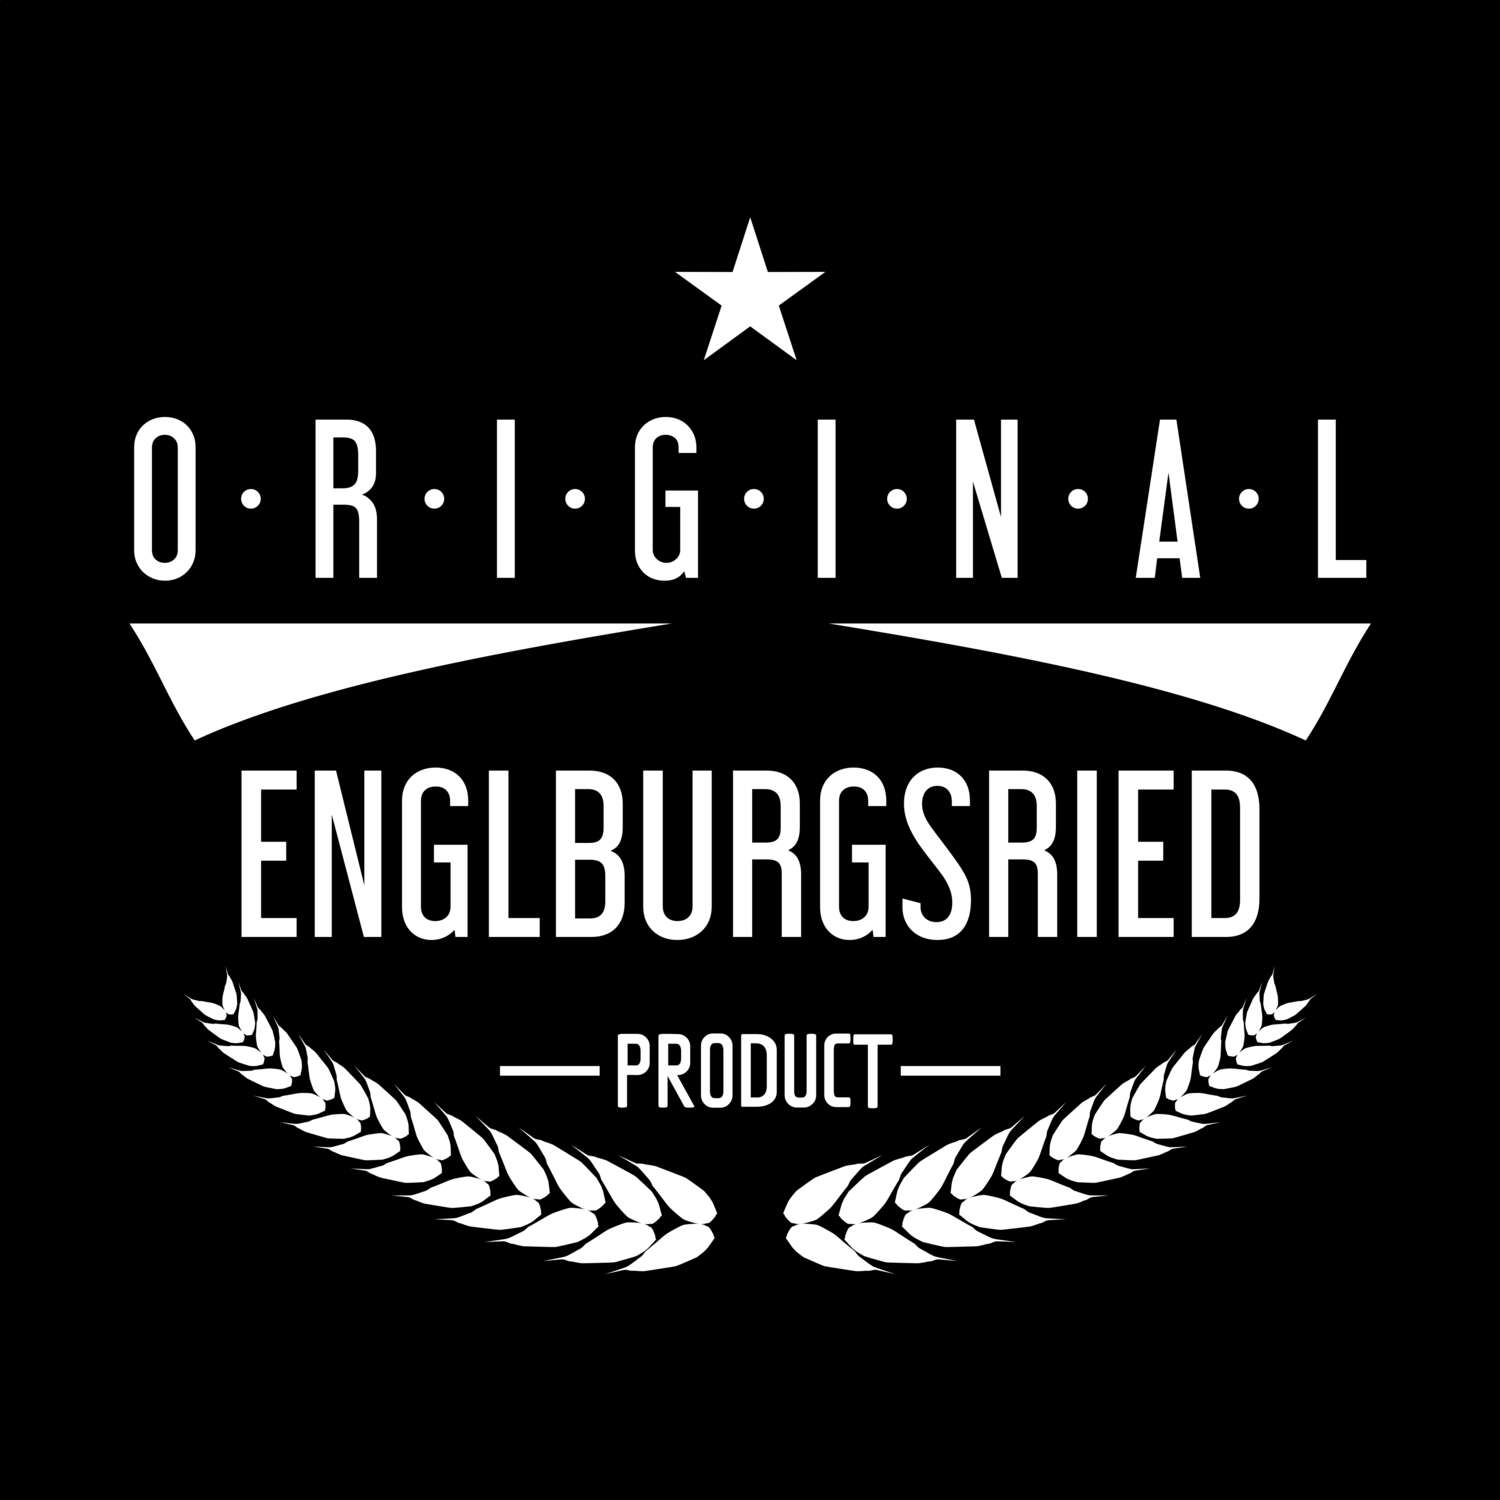 Englburgsried T-Shirt »Original Product«